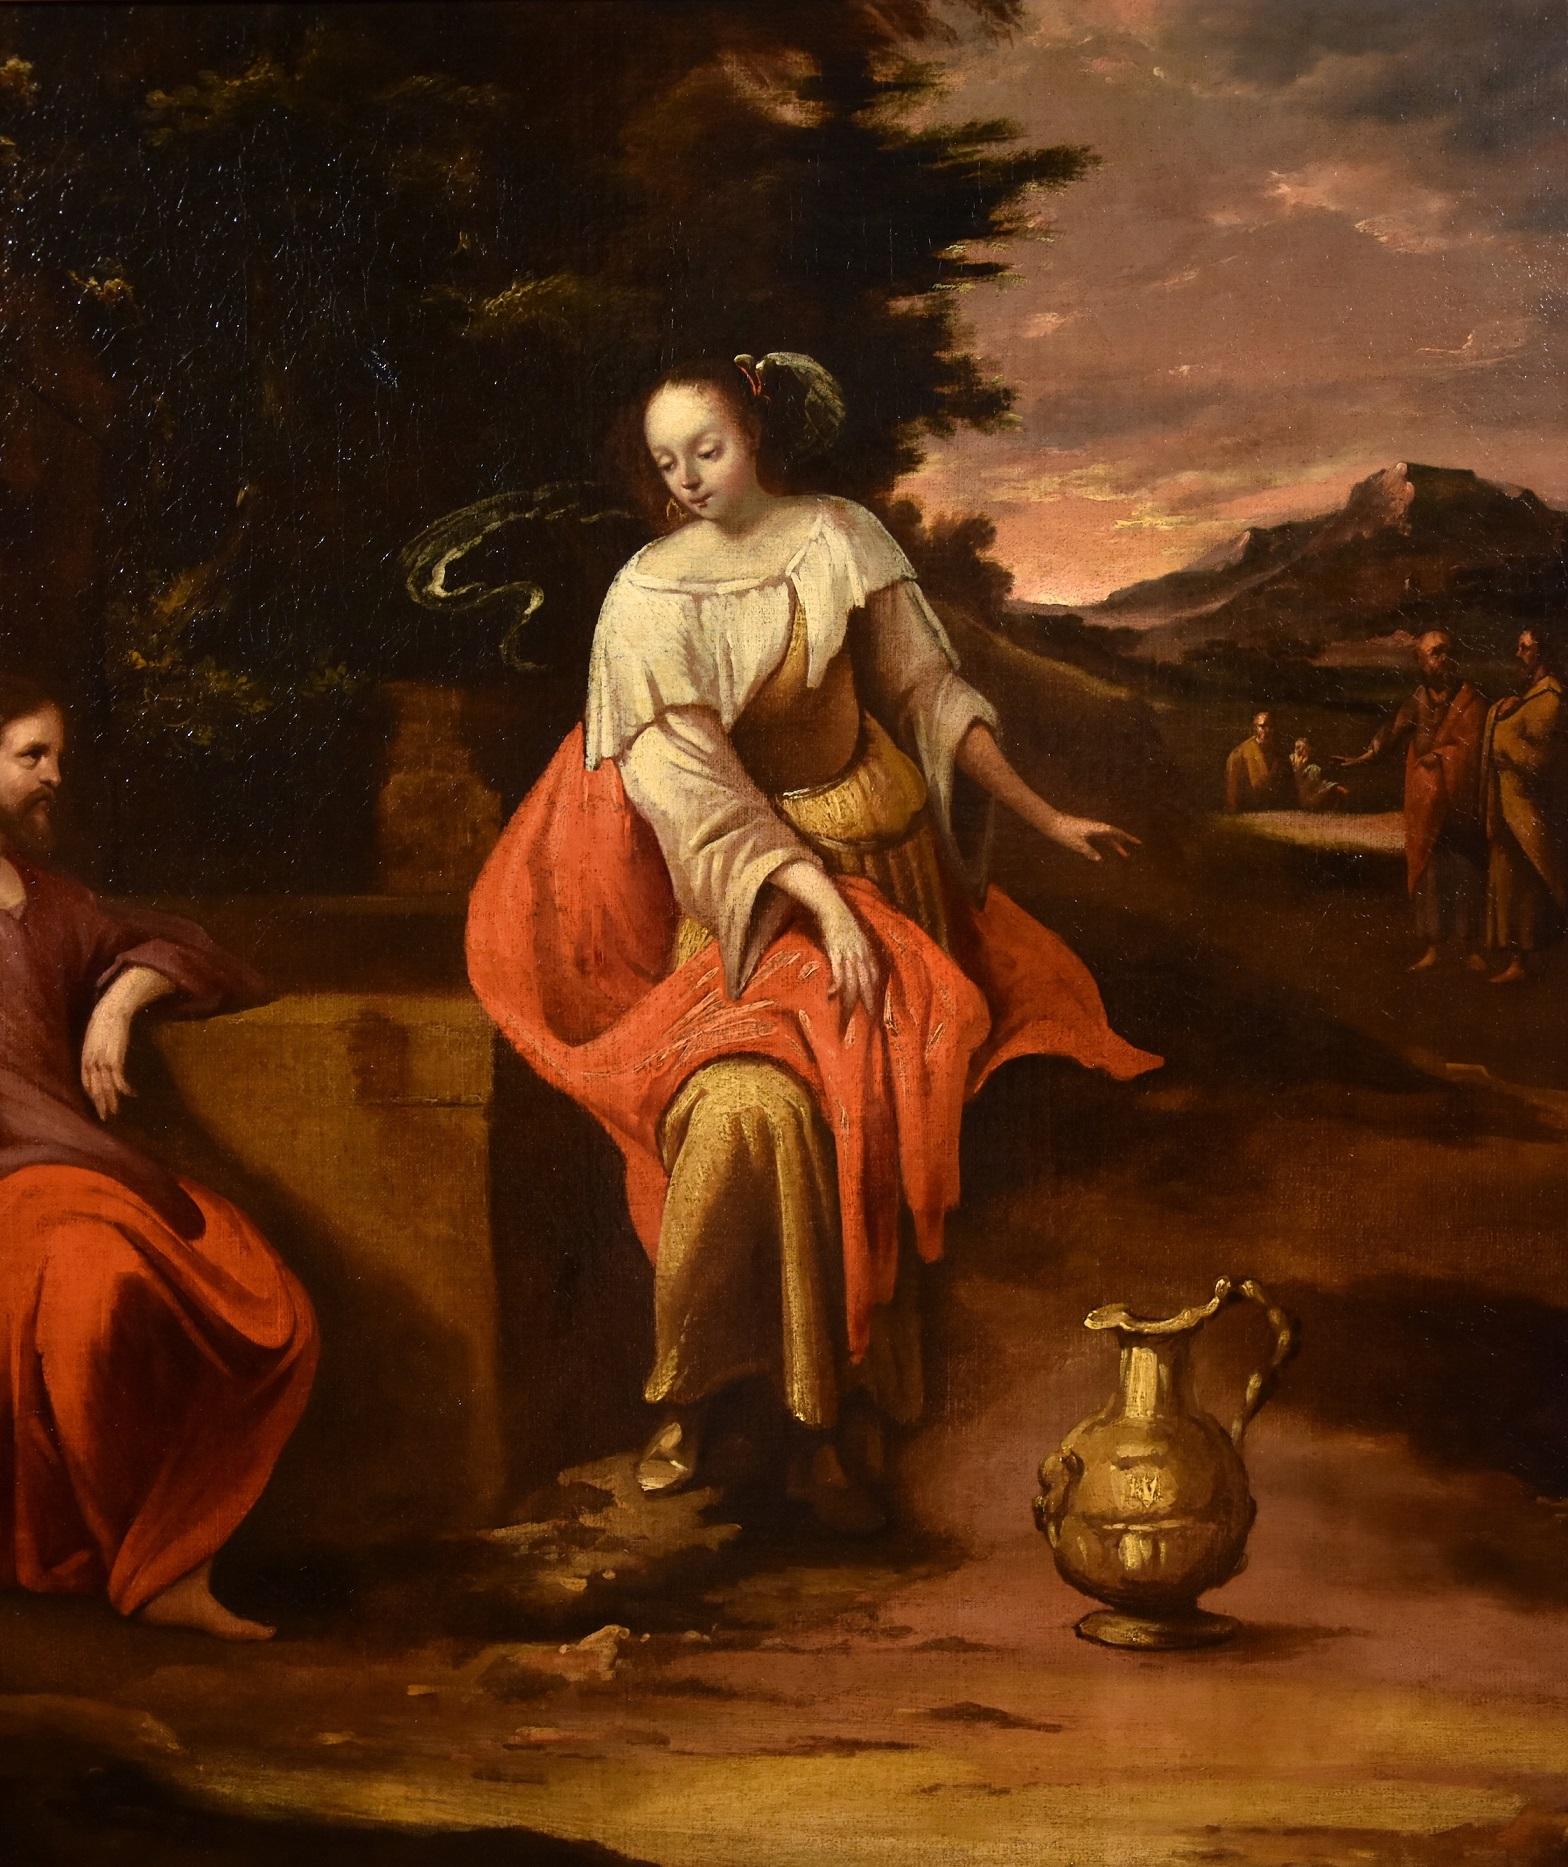 Christ Samaritan Paint Oil on canvas Oil on canvas Flemish Painter 17th Century 2